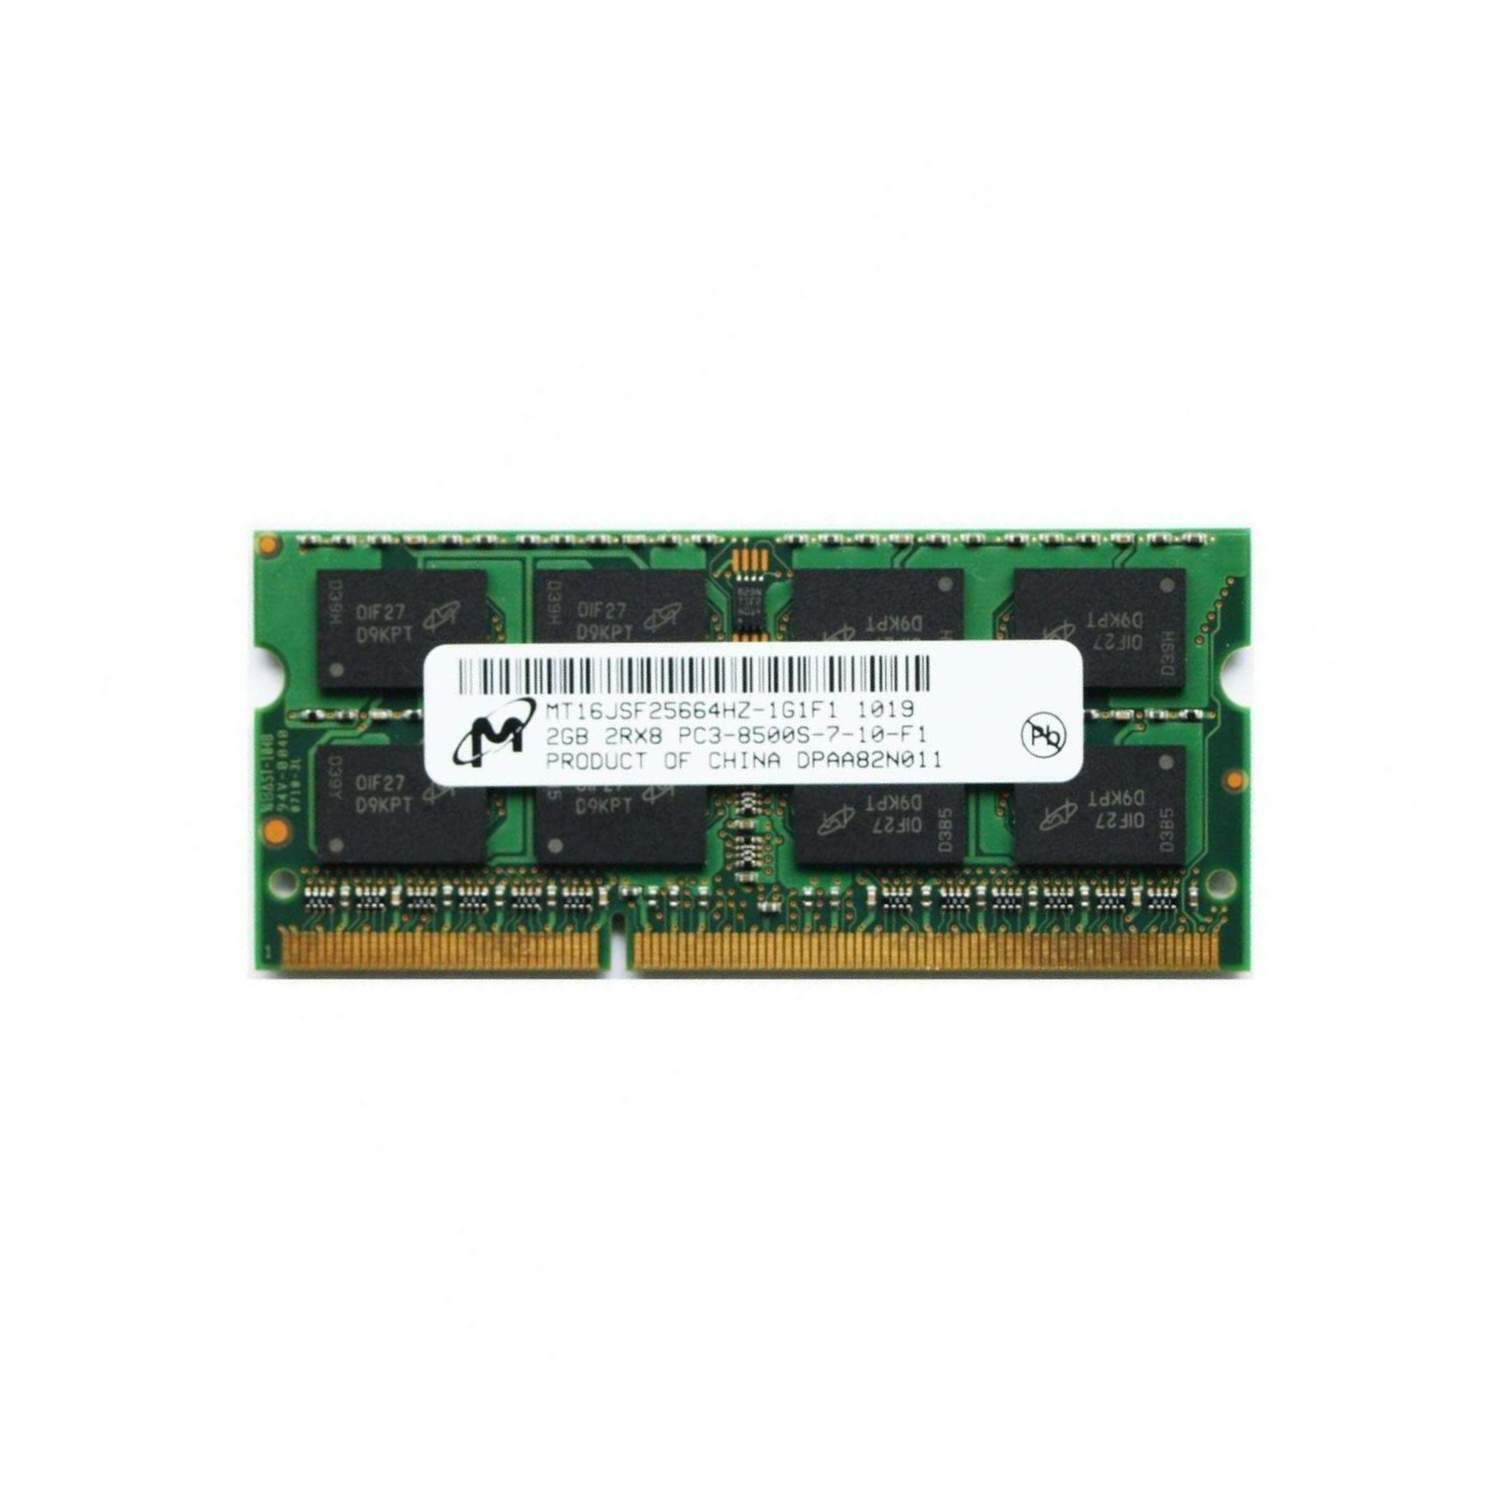 Micron Chip MT16JSF25664HZ-1G1F1 2GB DDR3 PC-8500 1066MHz 204pin Ram Memory